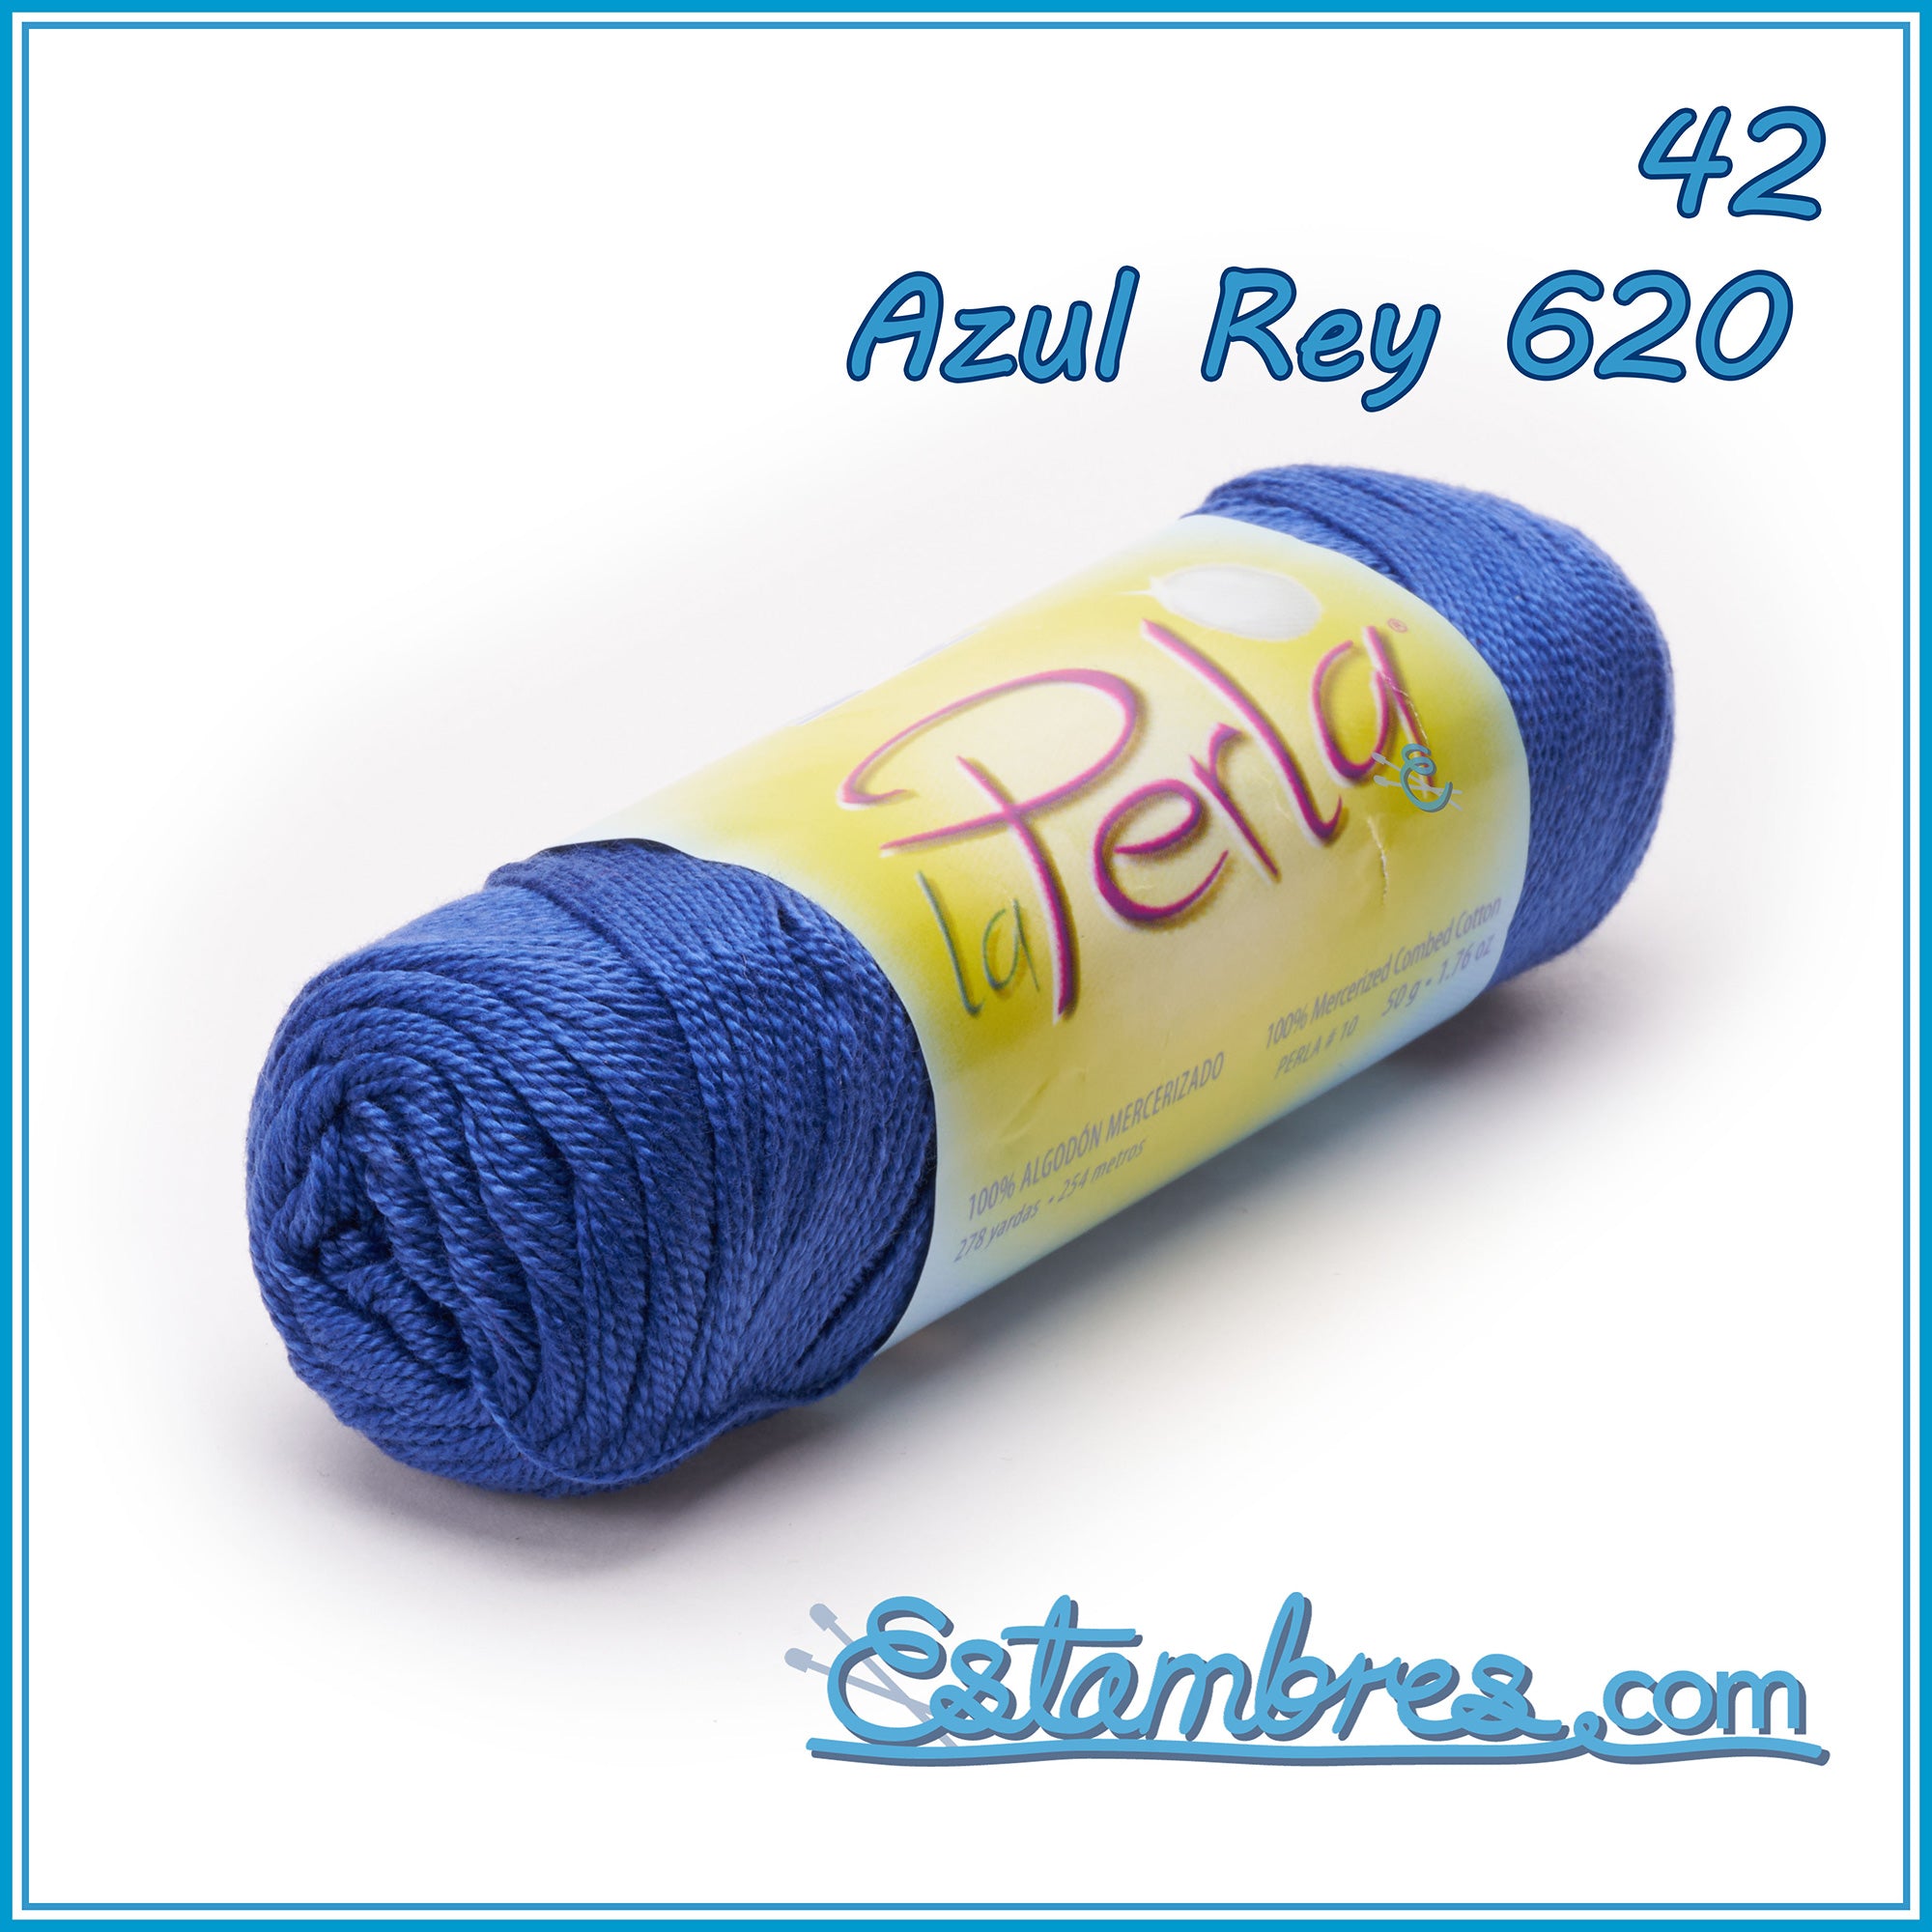 LA PERLA 50grs by Omega Perle Thread 100% Mercerized Cotton Thread